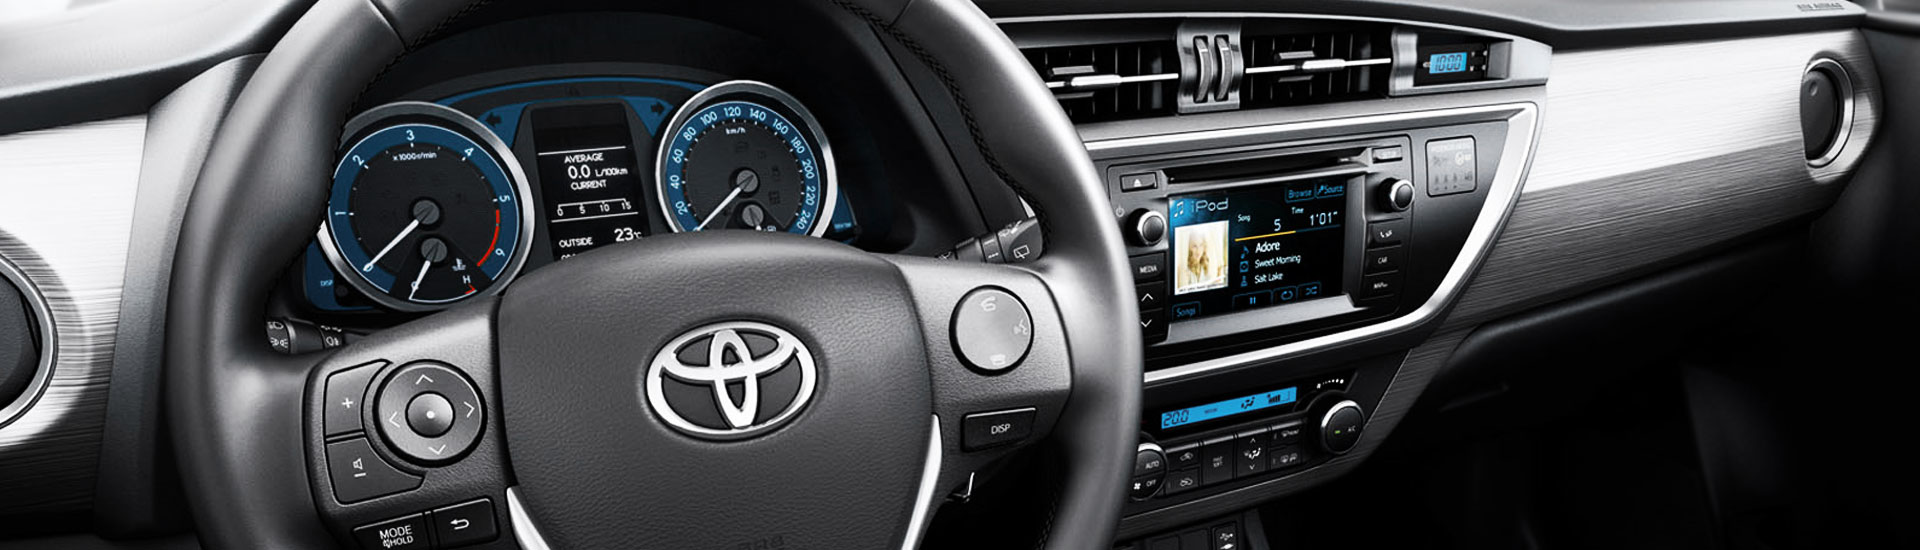 Toyota Yaris Dash Trim Kits